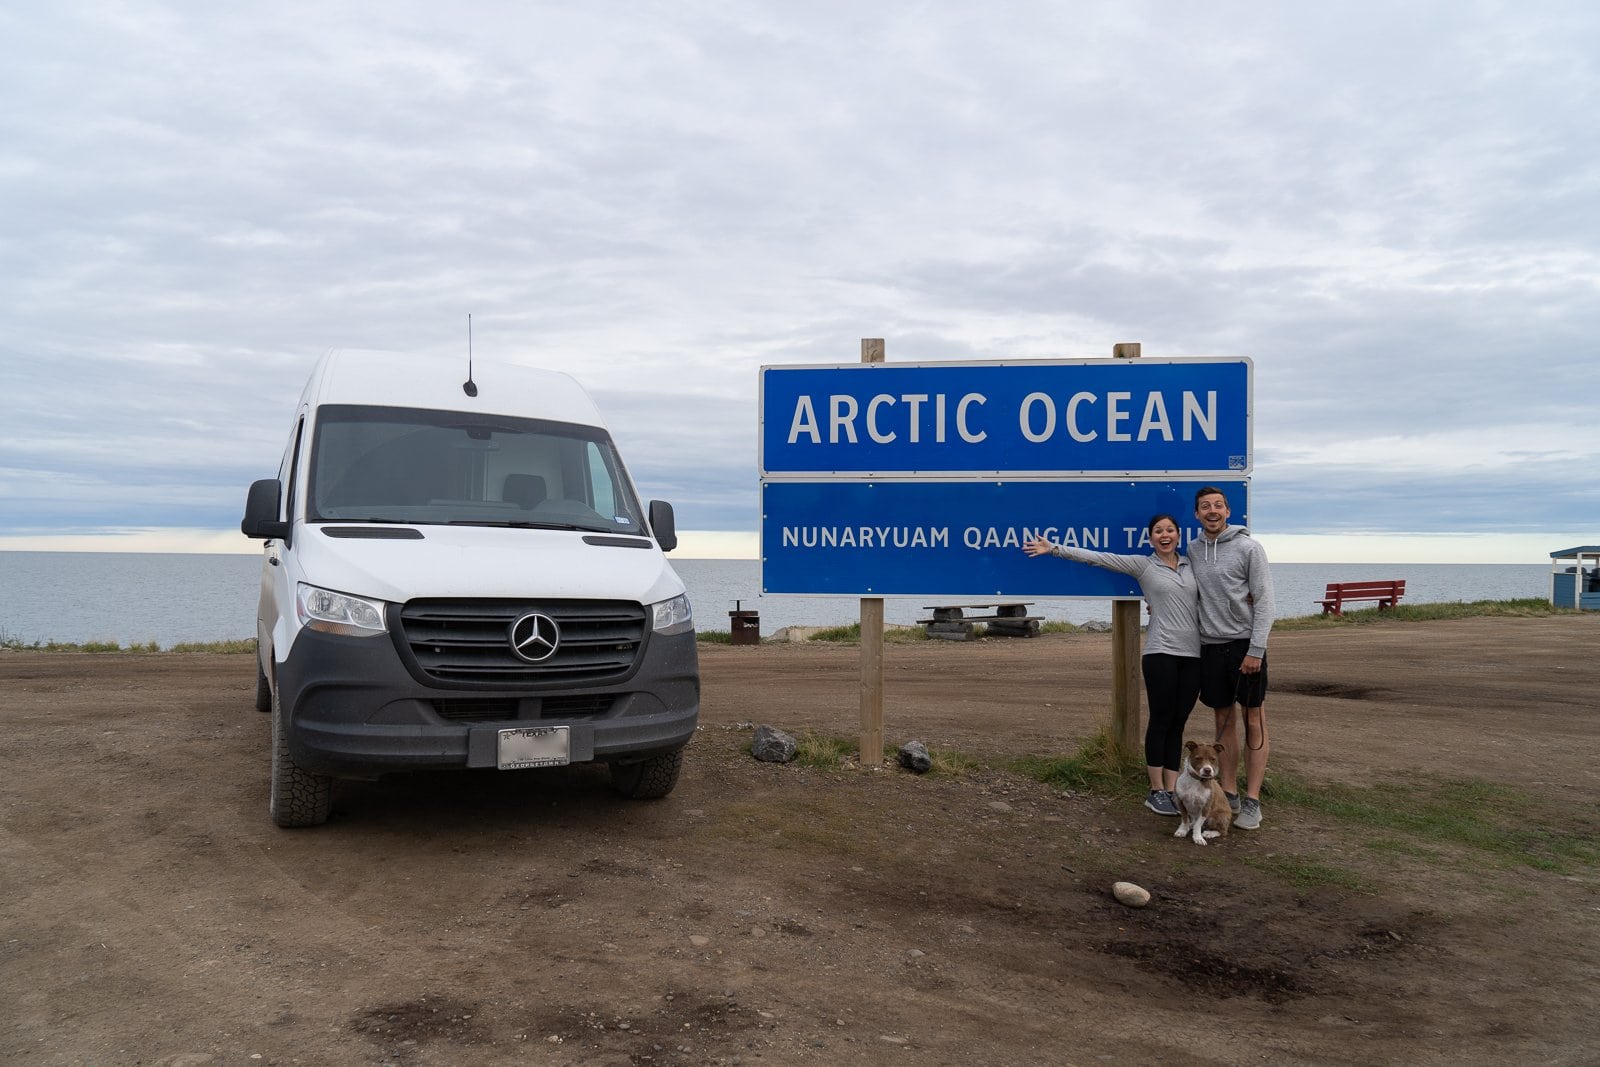 Arctic Ocean at Tuktoyaktuk on the Dempster Highway